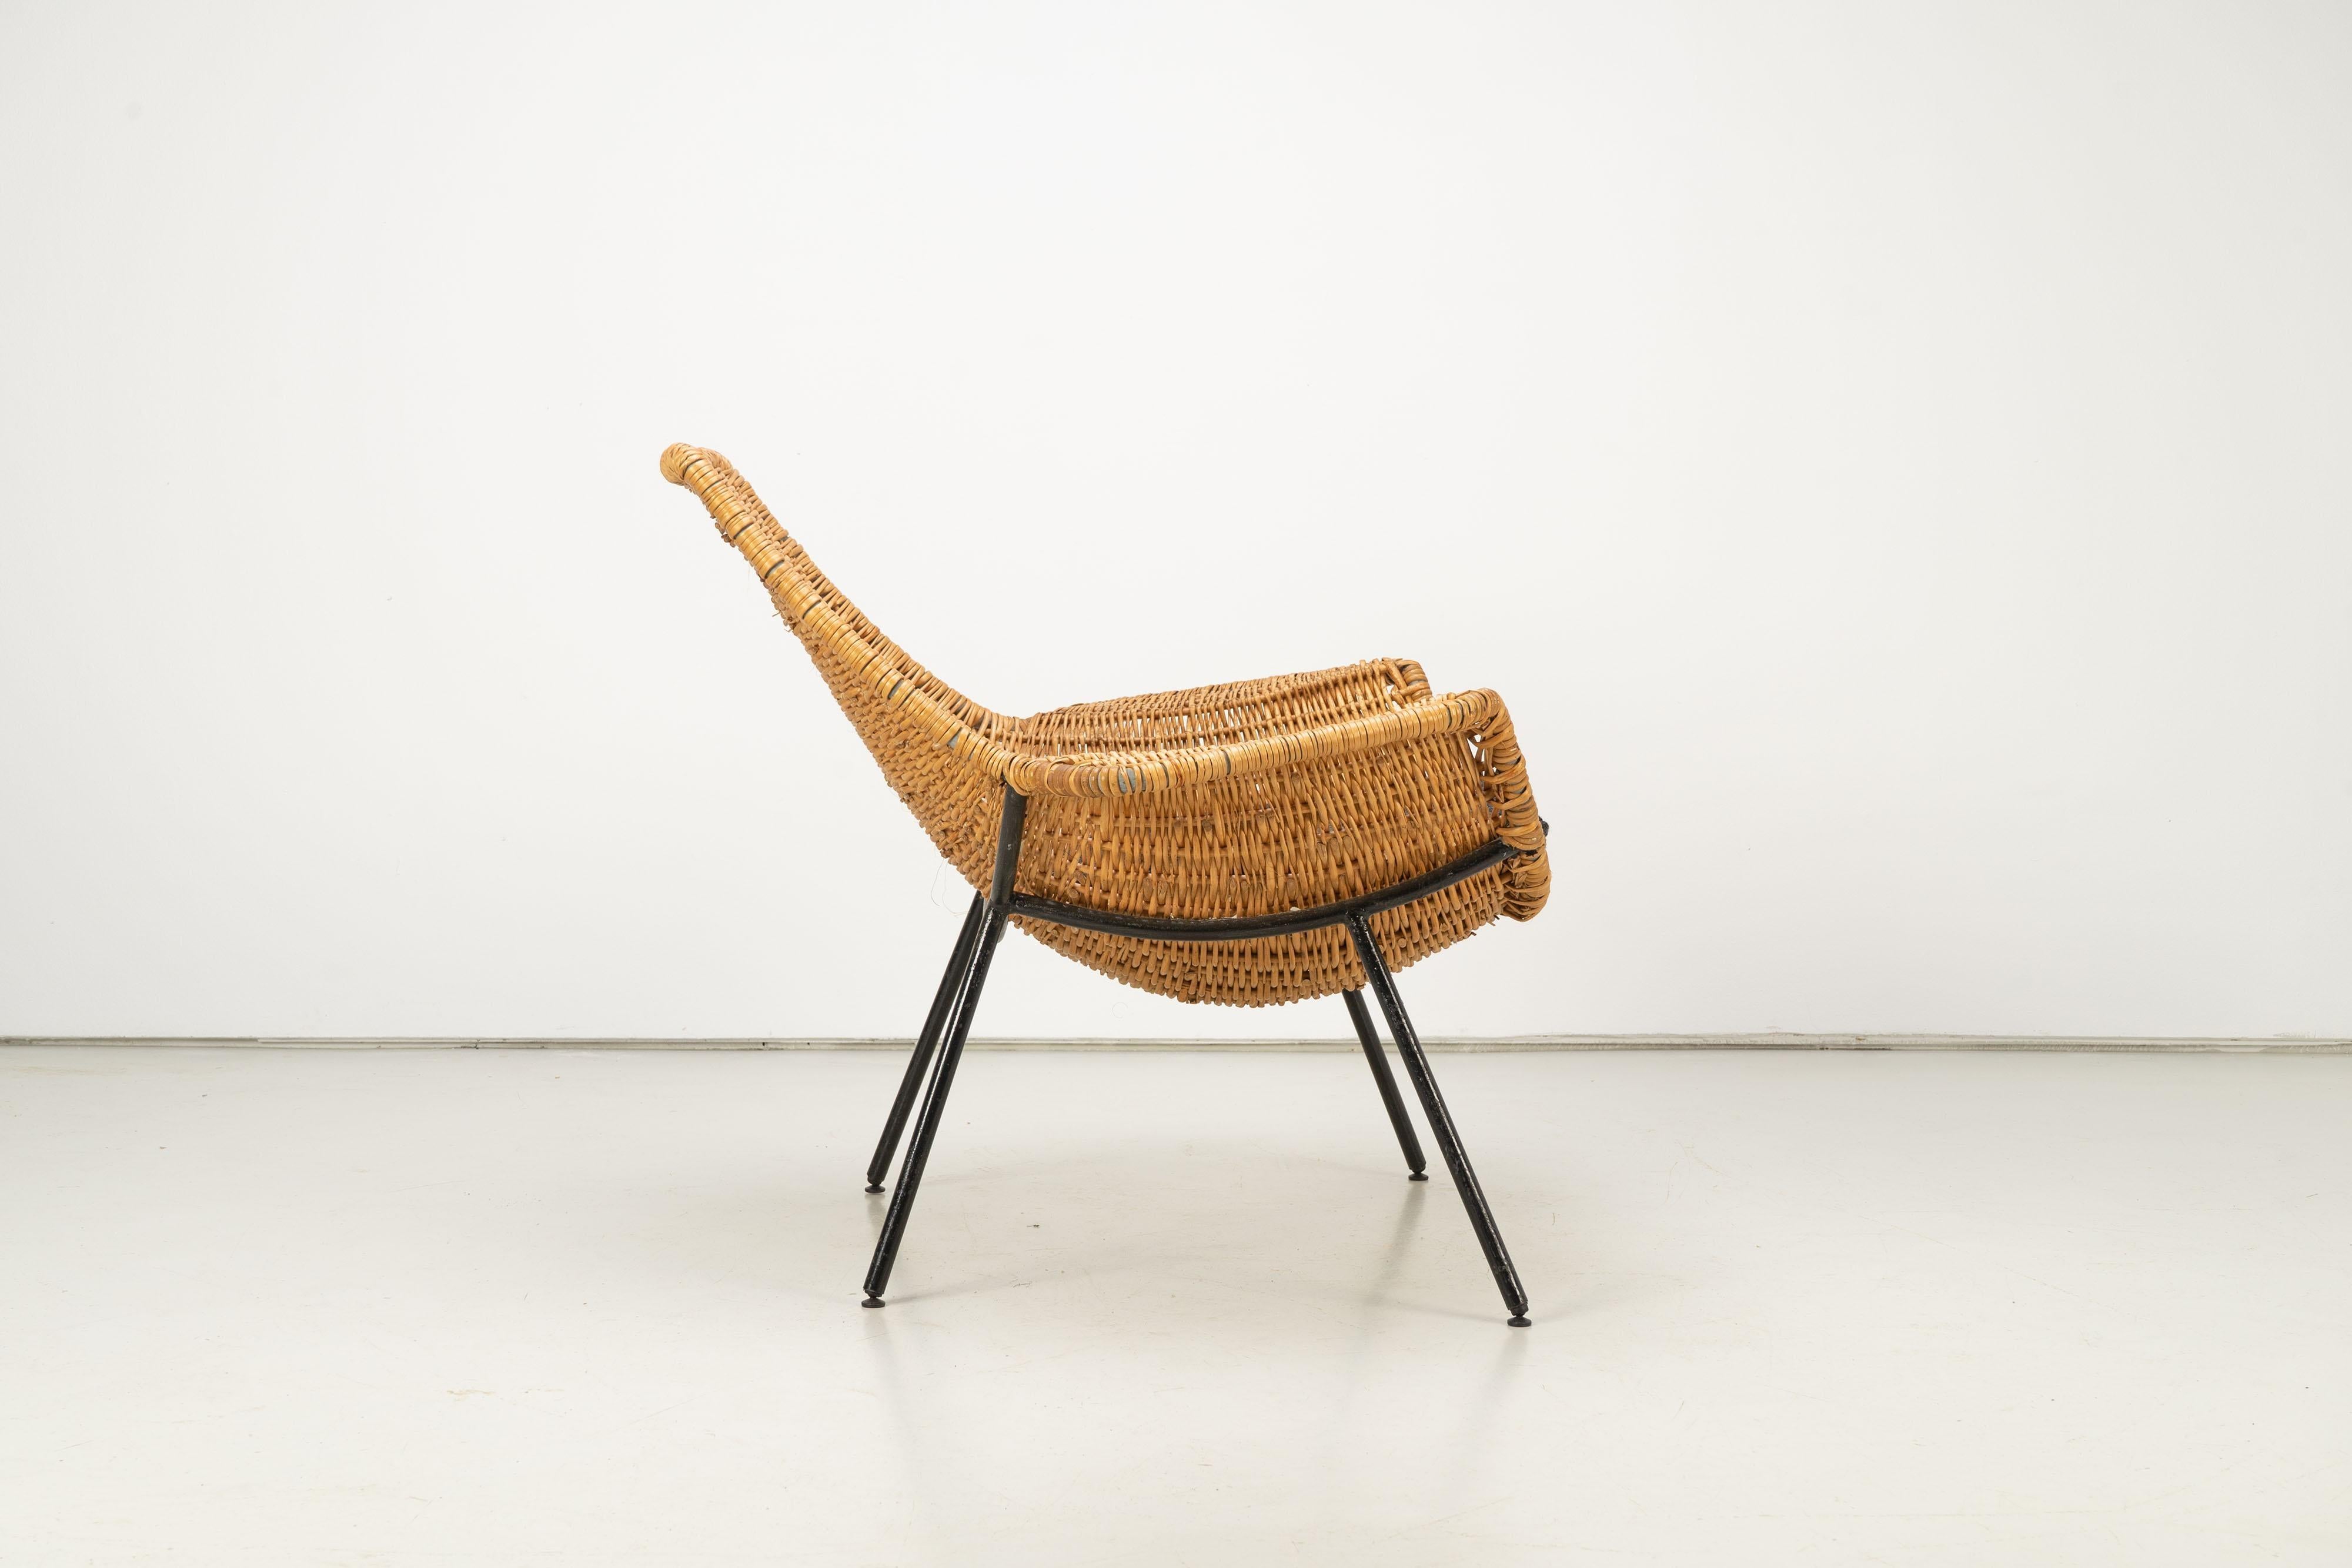 Italian Mid-Century Modern Rattan Lounge Chair by Giancarlo De Carlo, Italy, 1954